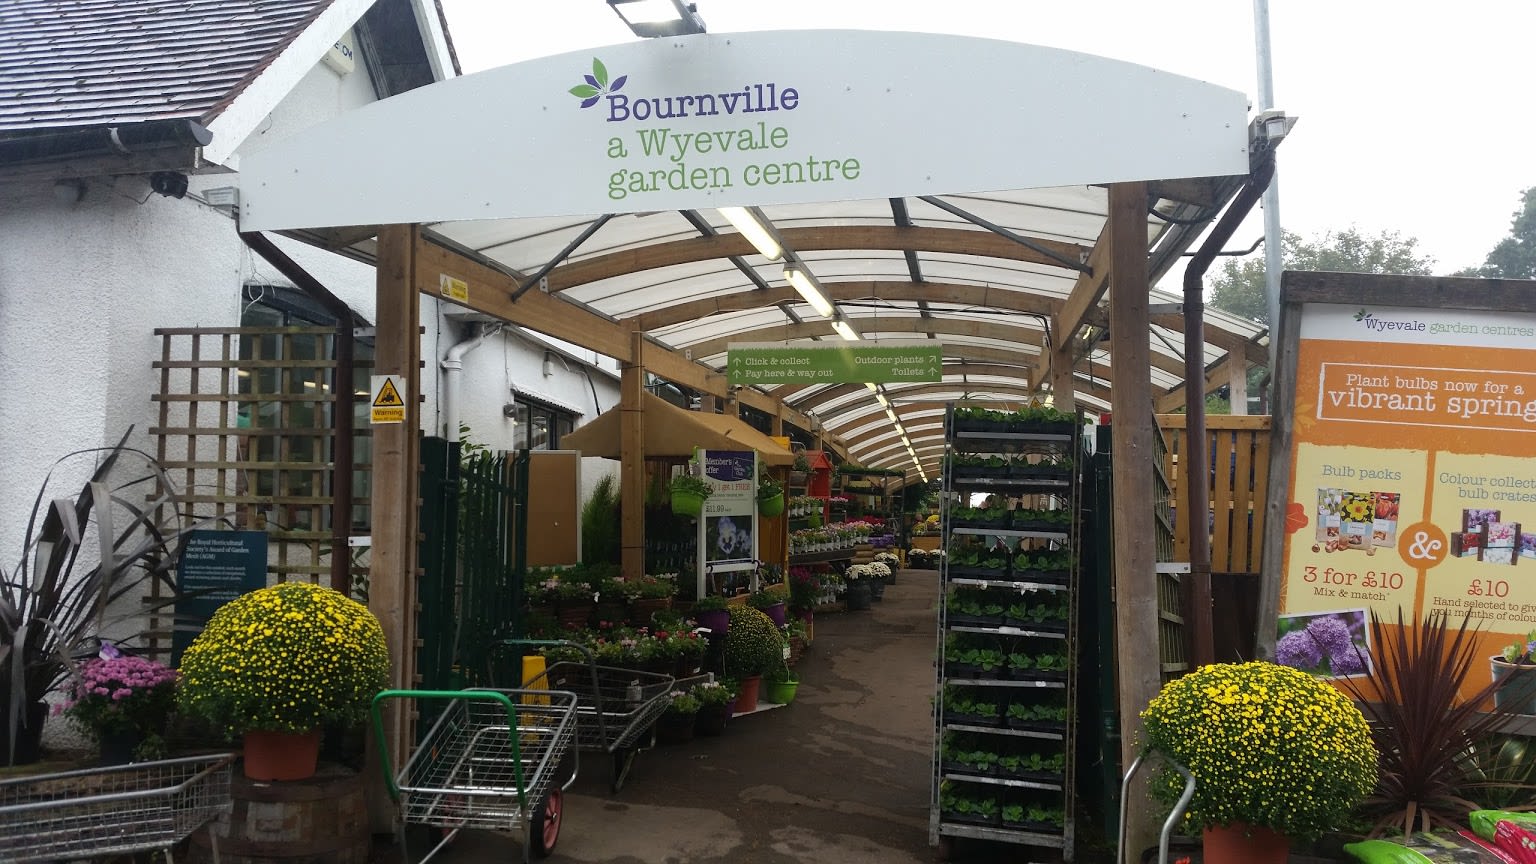 Bournville Garden Centre